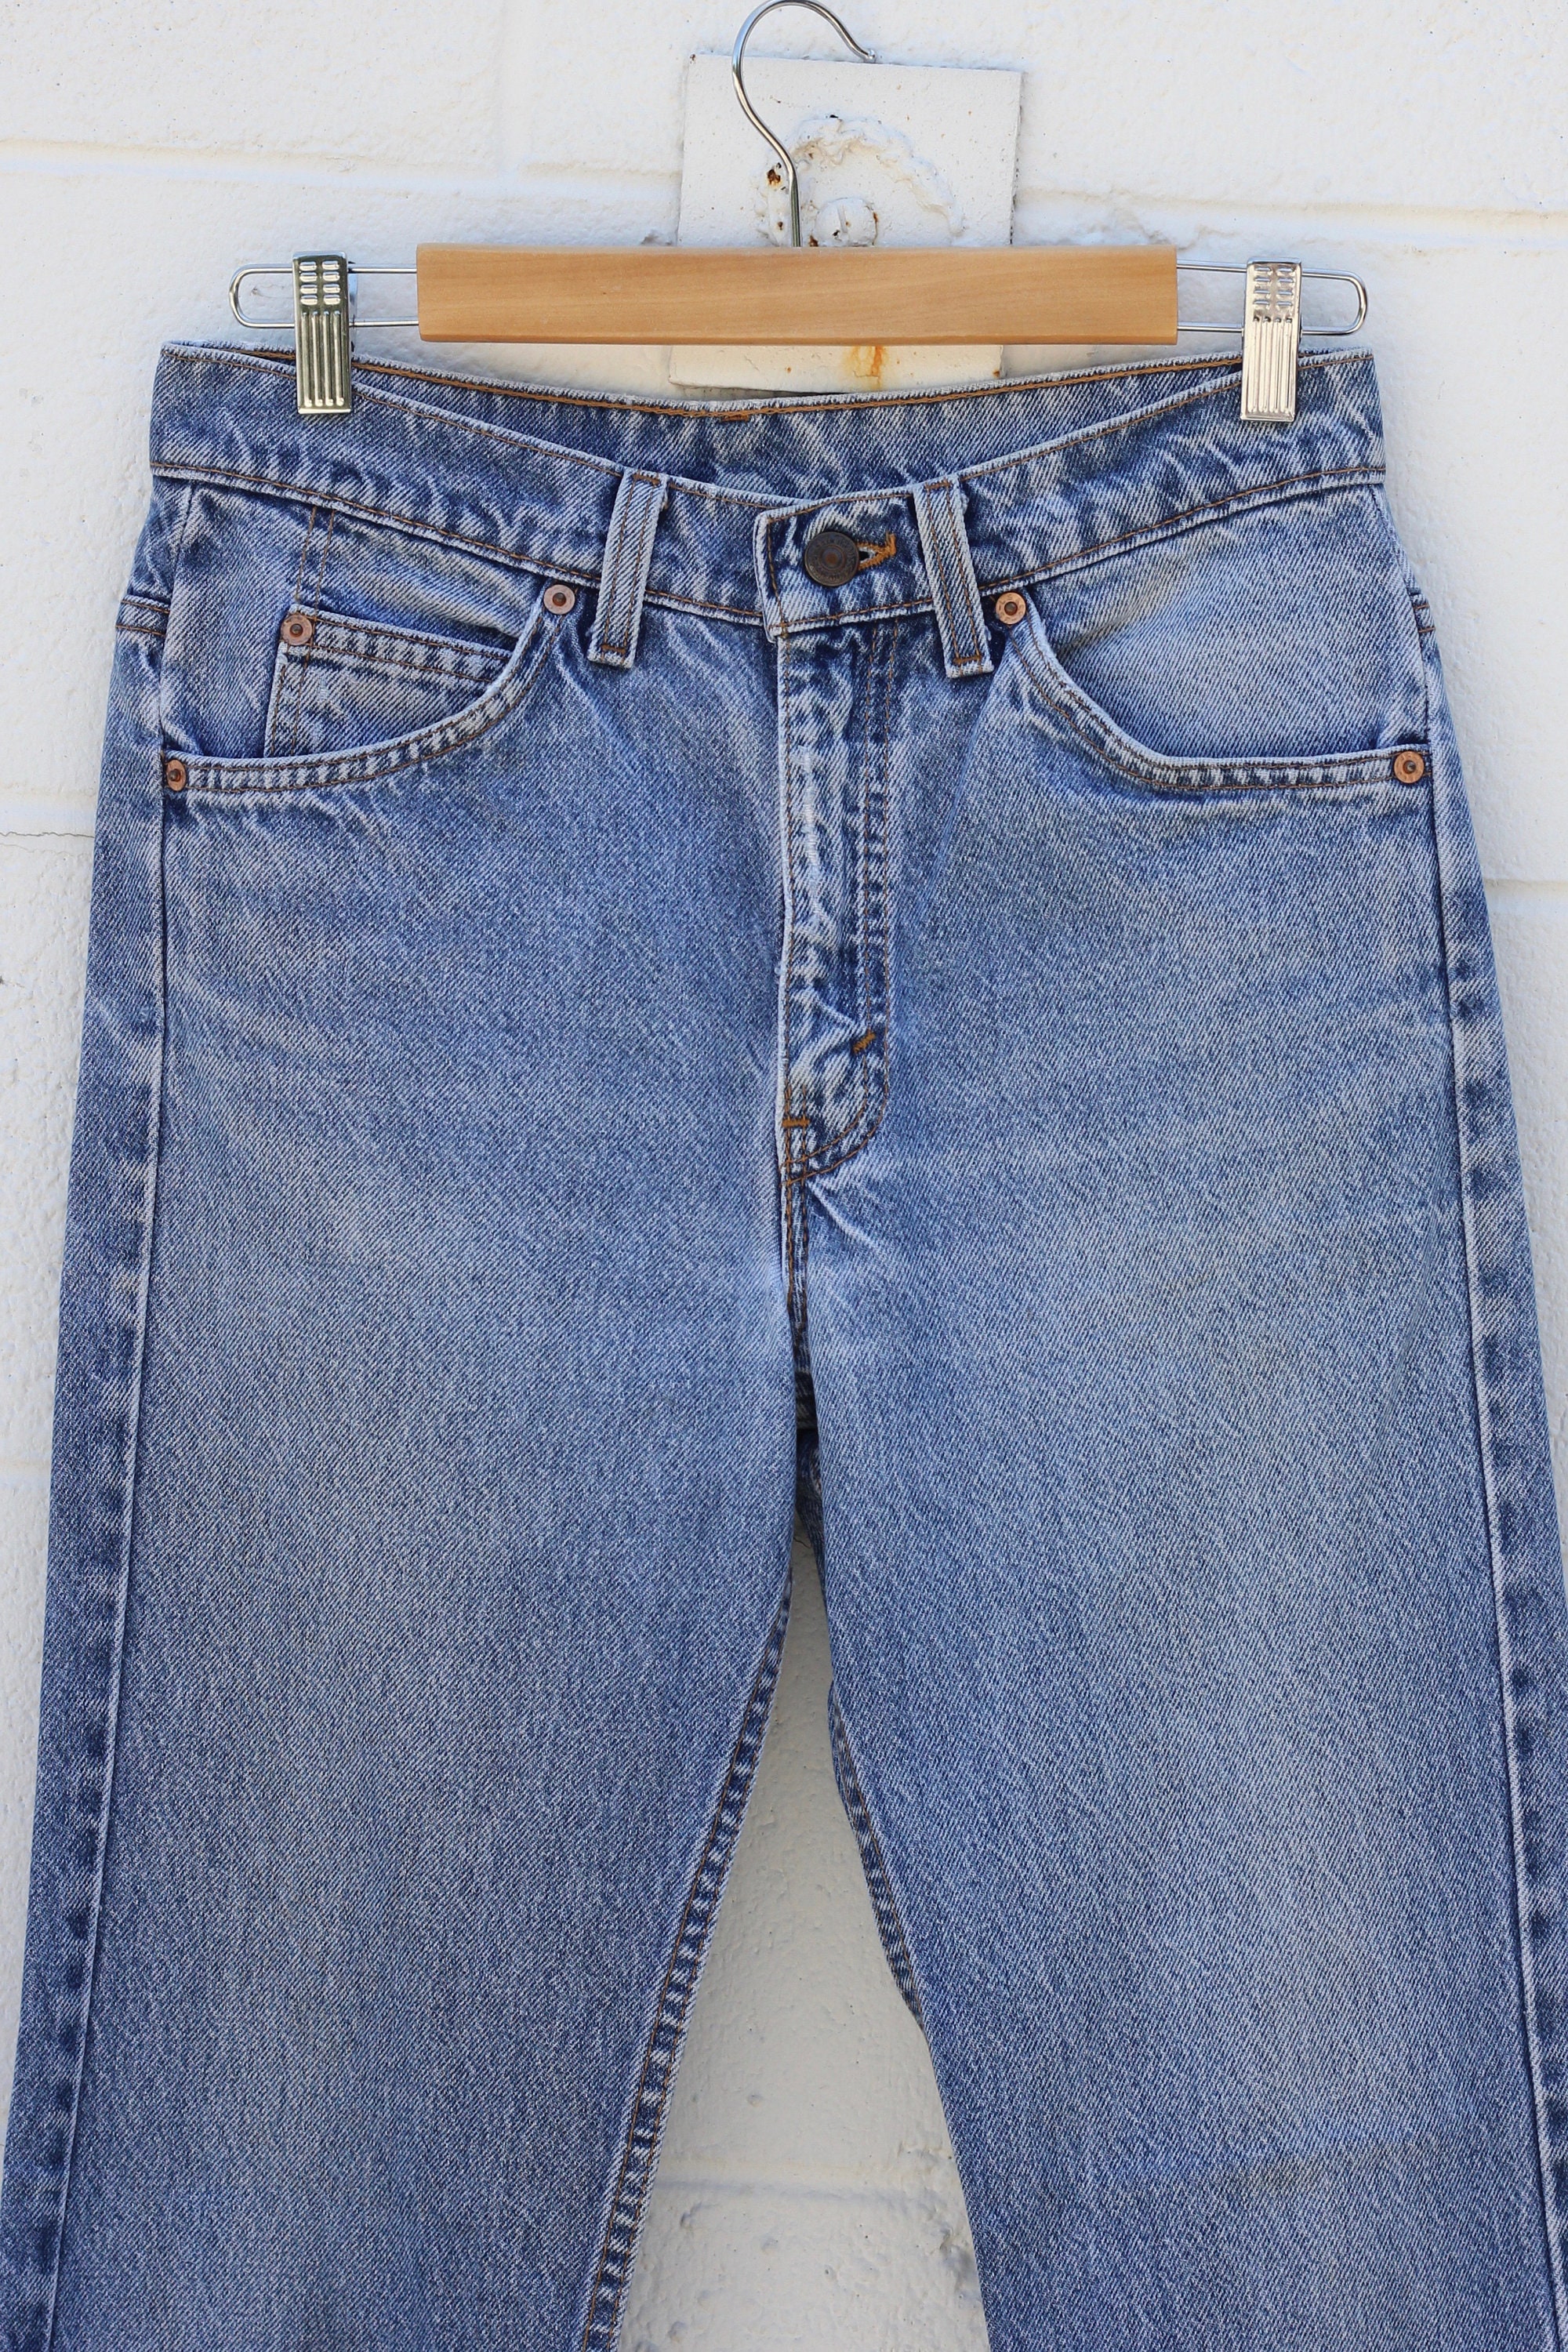 Vintage Levi's 517 Orange Tab Light Wash Denim Jeans Size 29x30 Made in USA